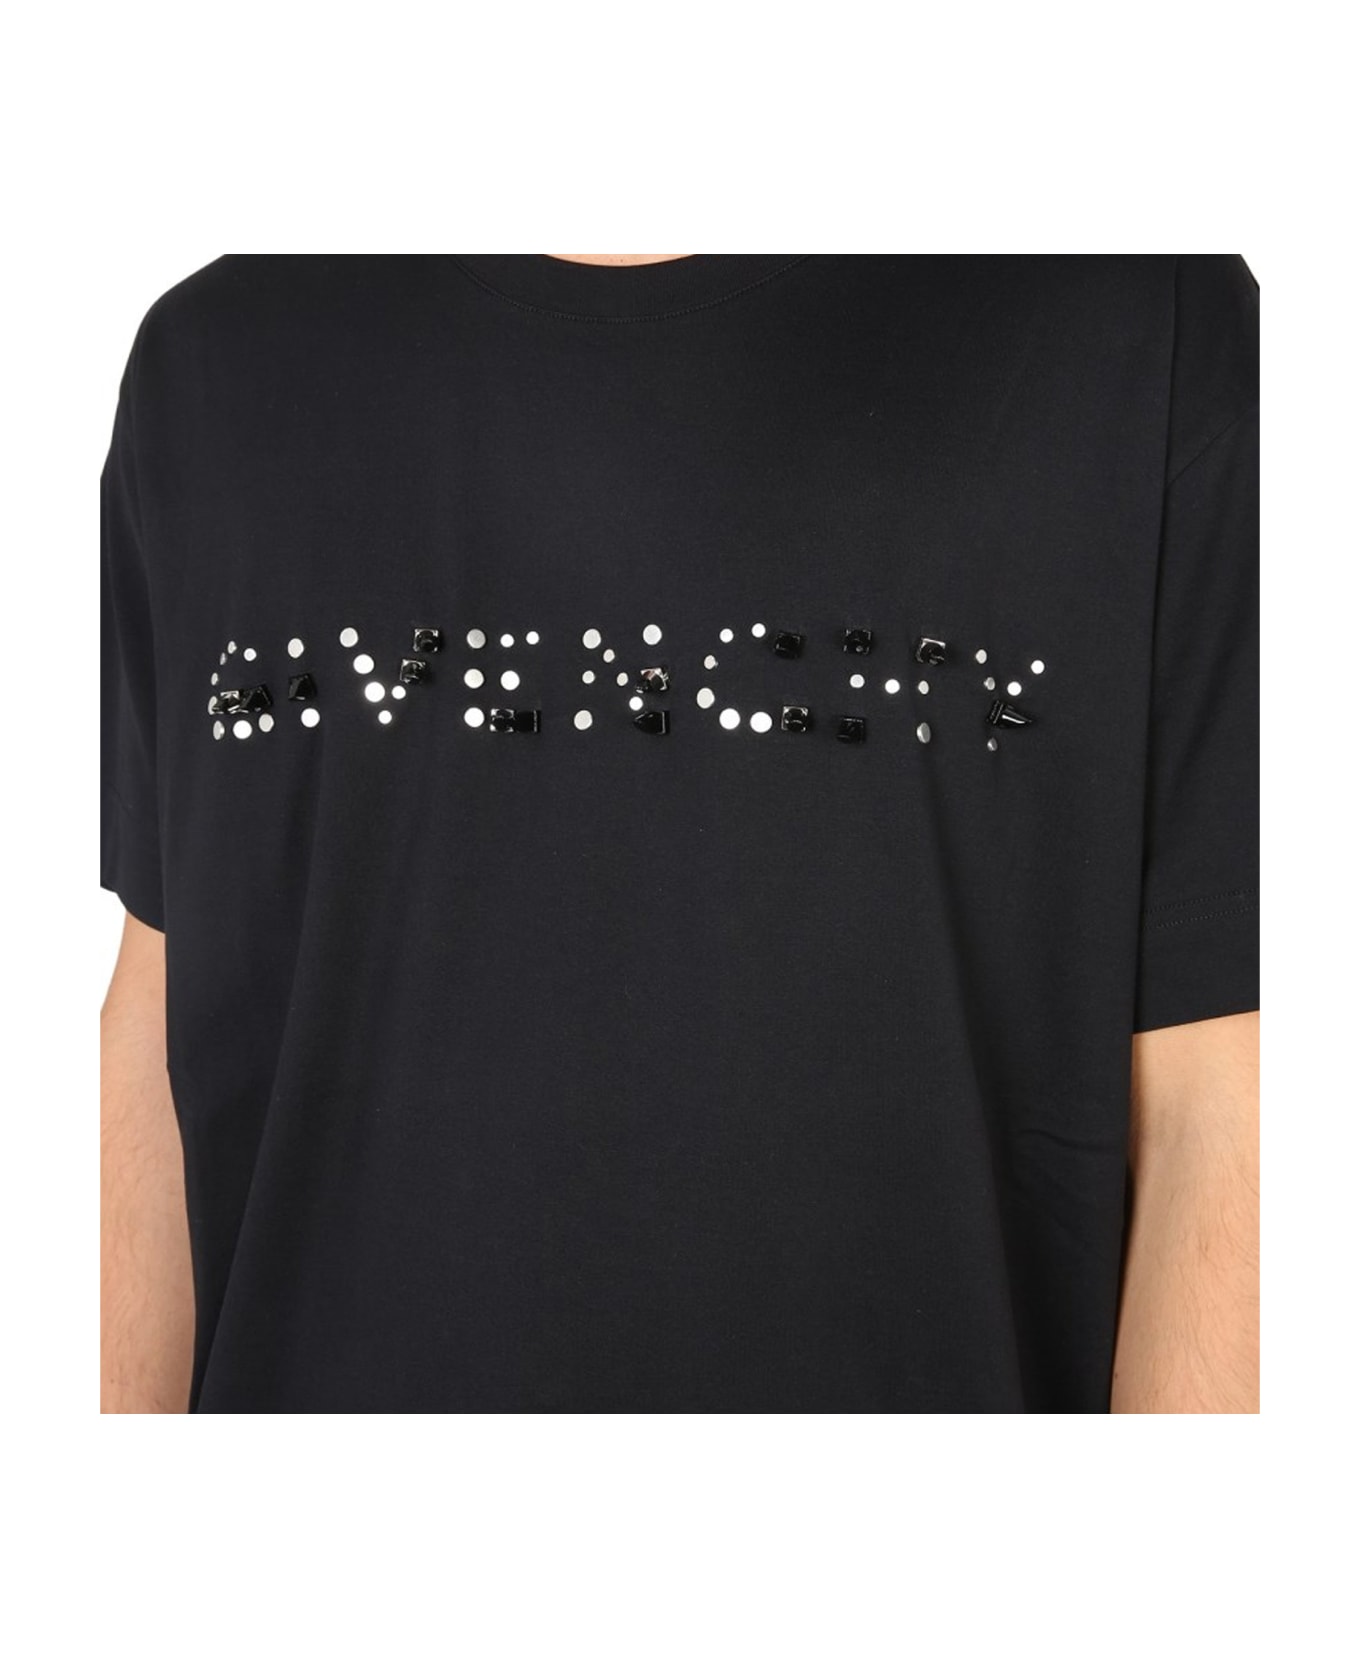 Givenchy Cotton Logo T-shirt - Black